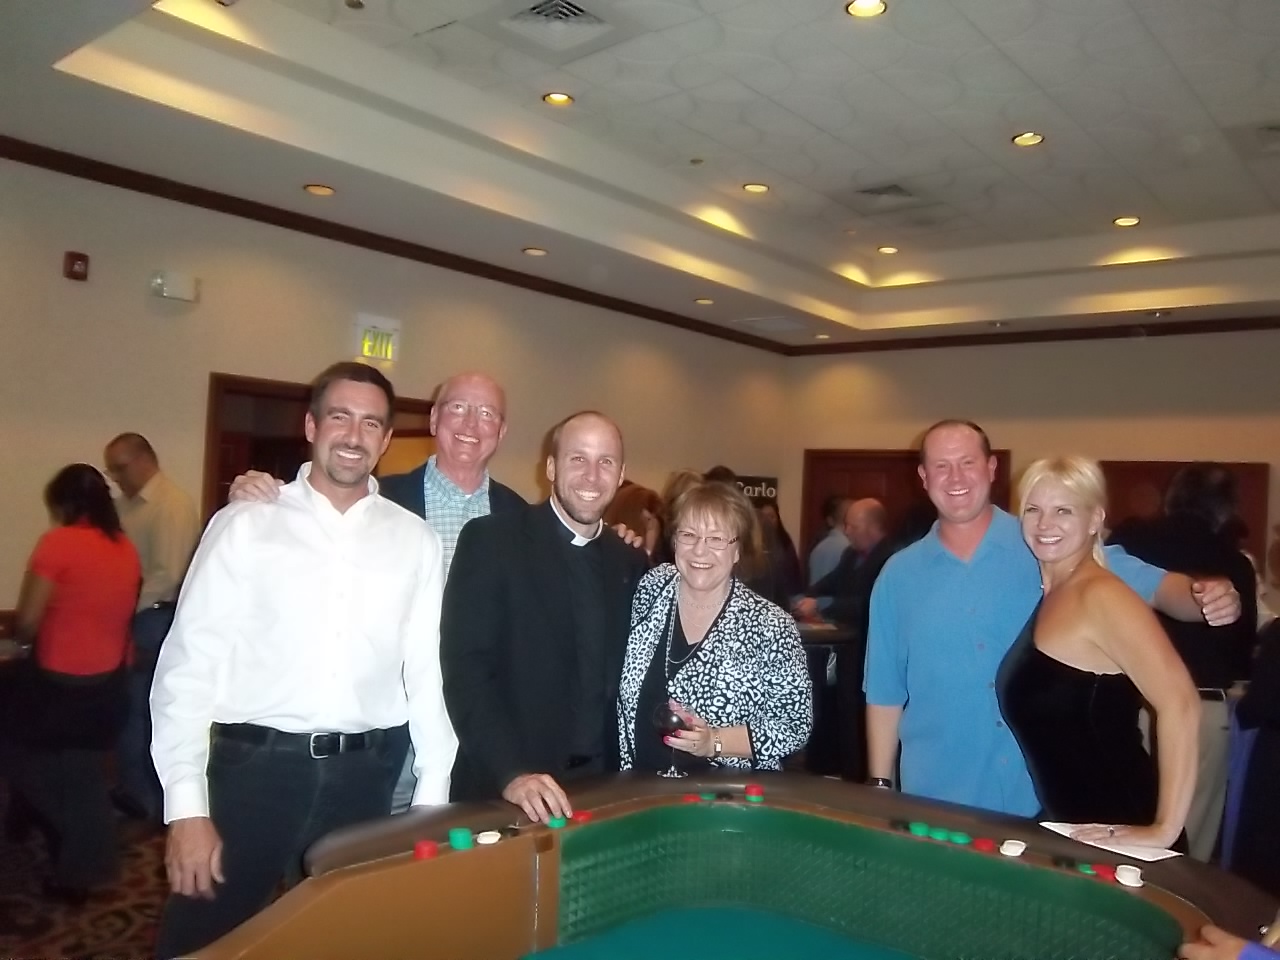 Catholic Charities of Flagstaff casino night fundraiser